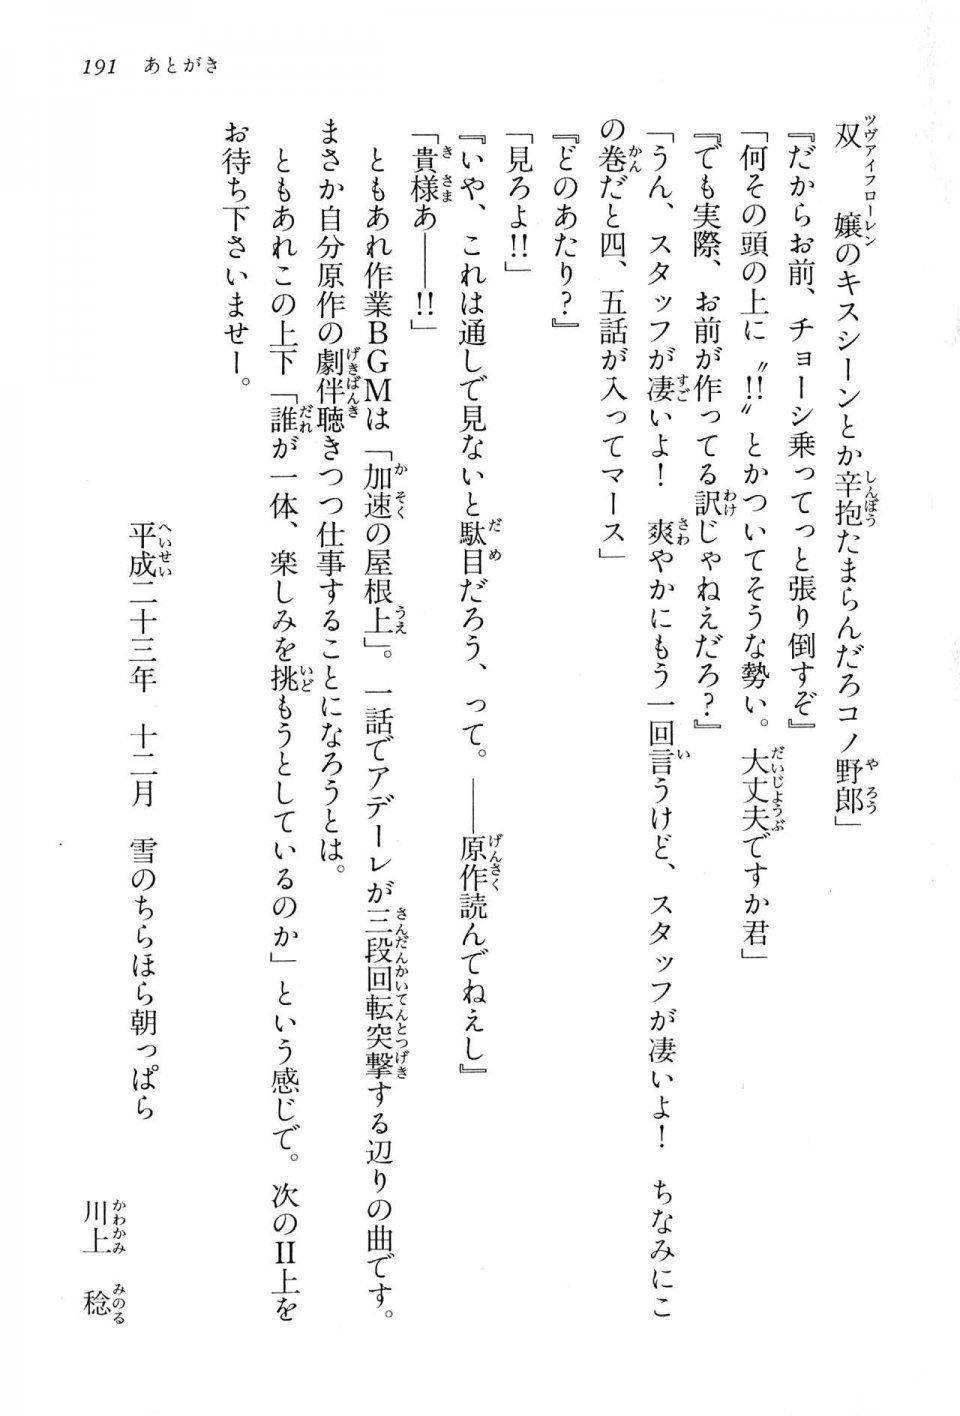 Kyoukai Senjou no Horizon BD Special Mininovel Vol 2(1B) - Photo #195